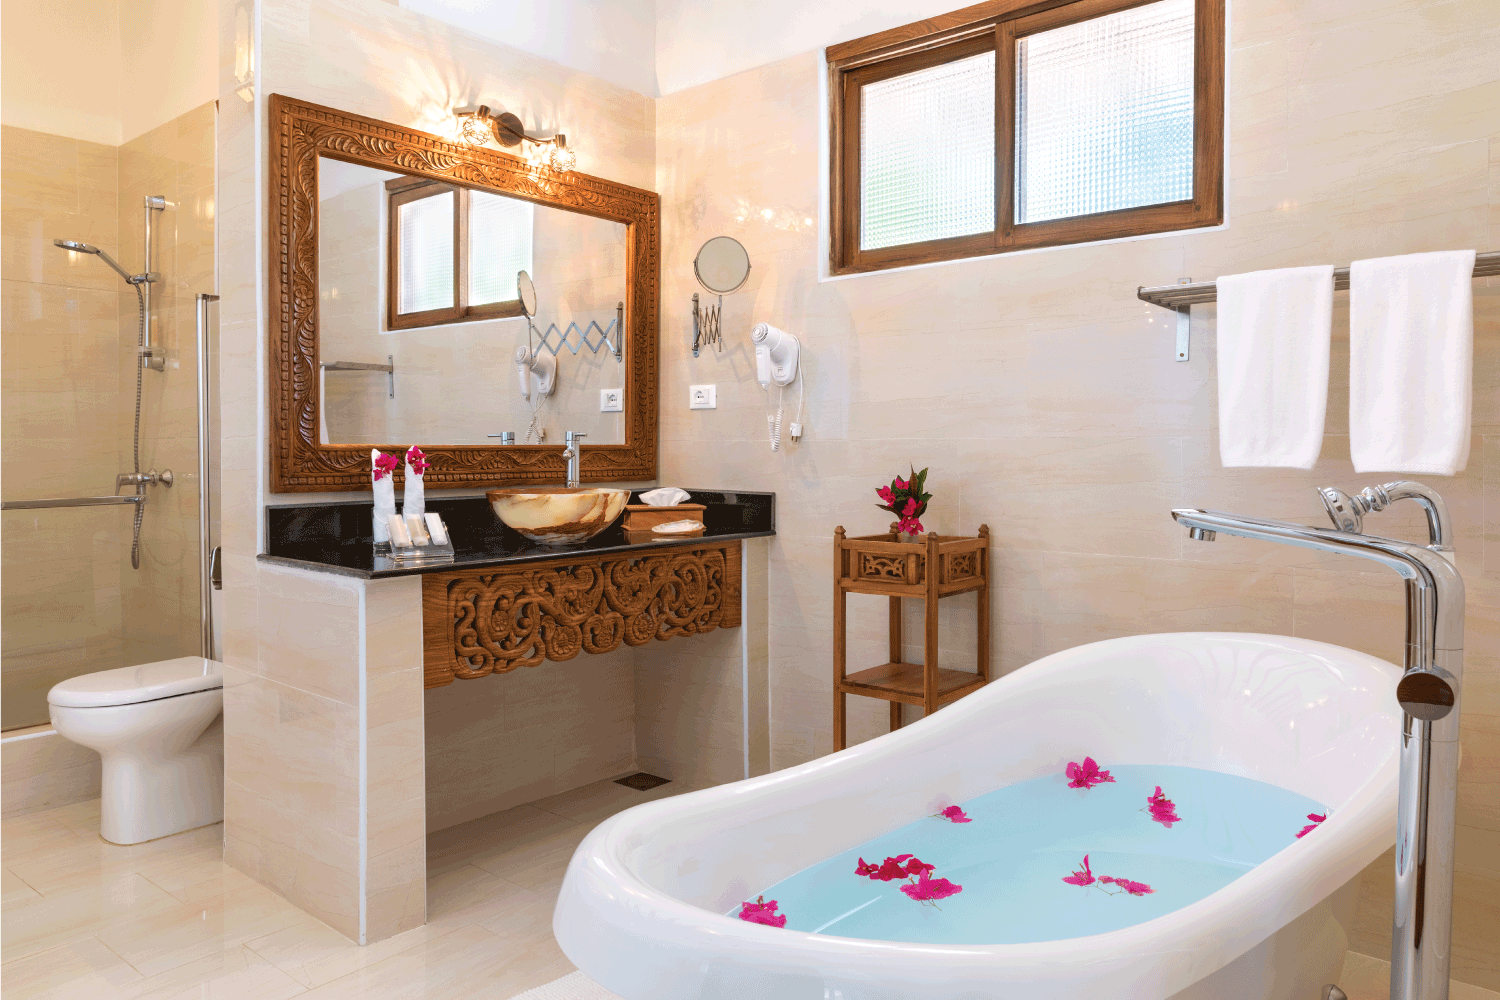 Bathroom with freestanding bathtub in luxury villa. 21 Awesome Bathtub Ideas To Check Out